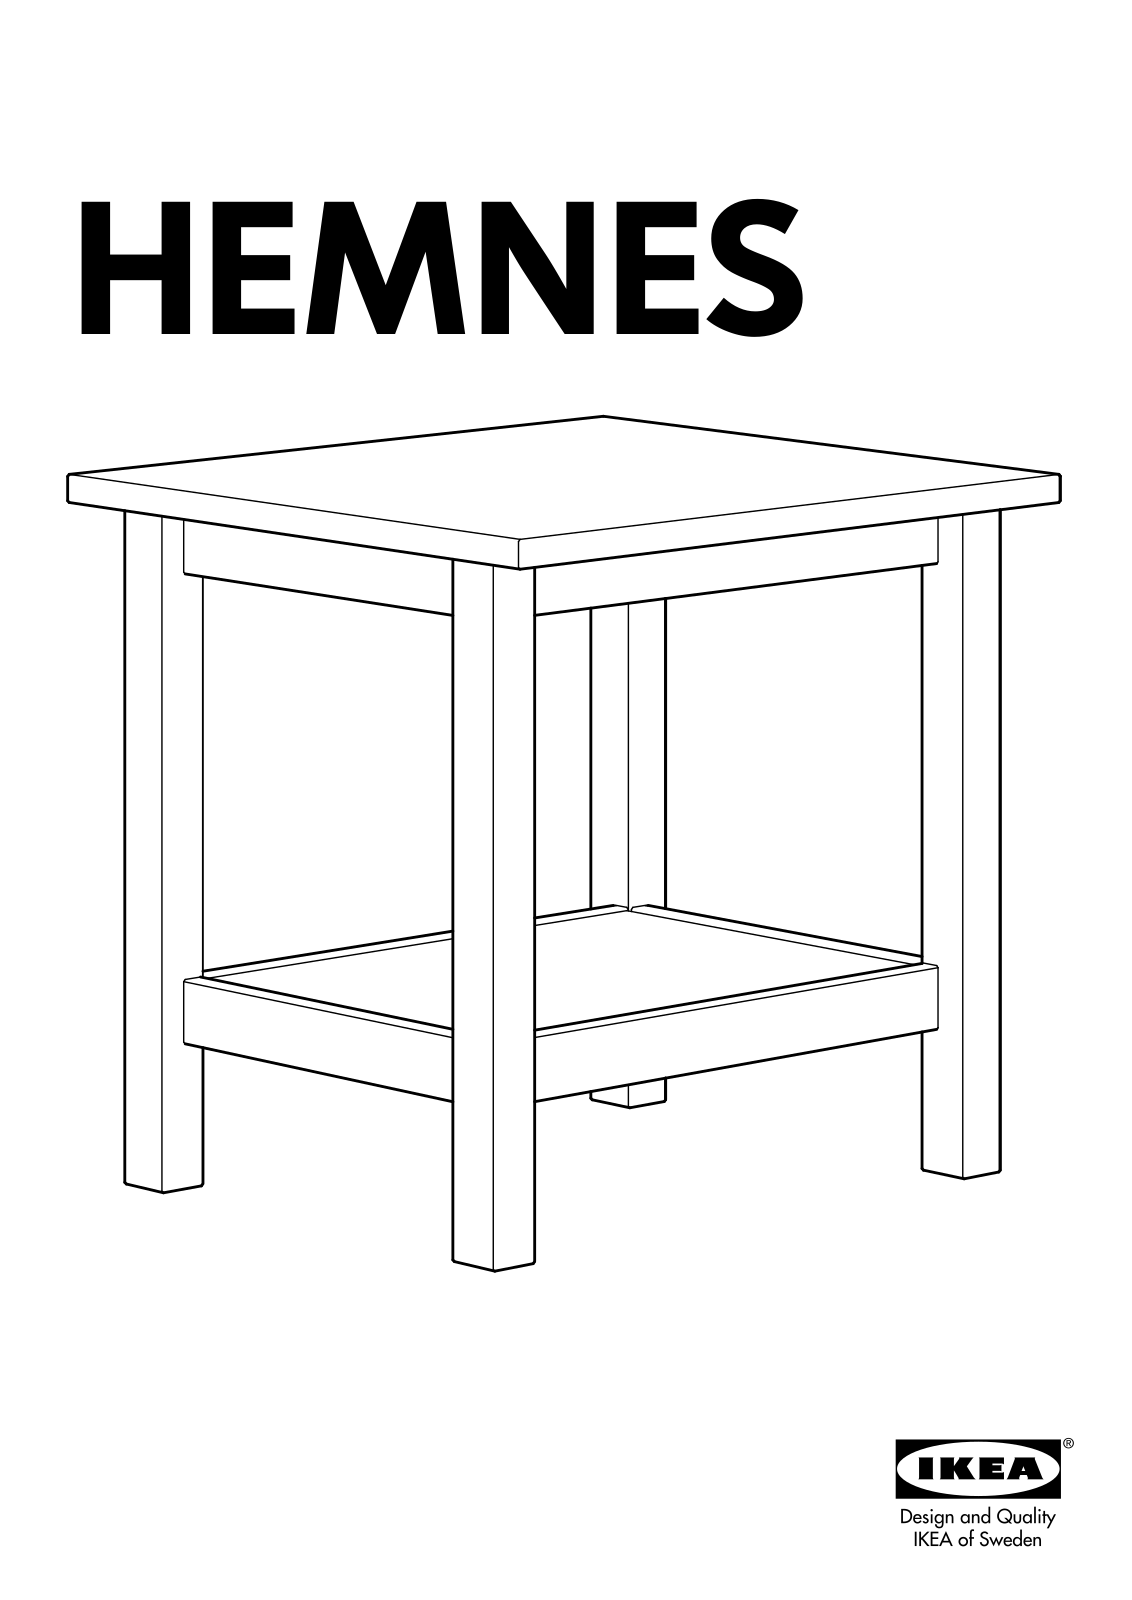 IKEA HEMNES SIDE TABLE User Manual